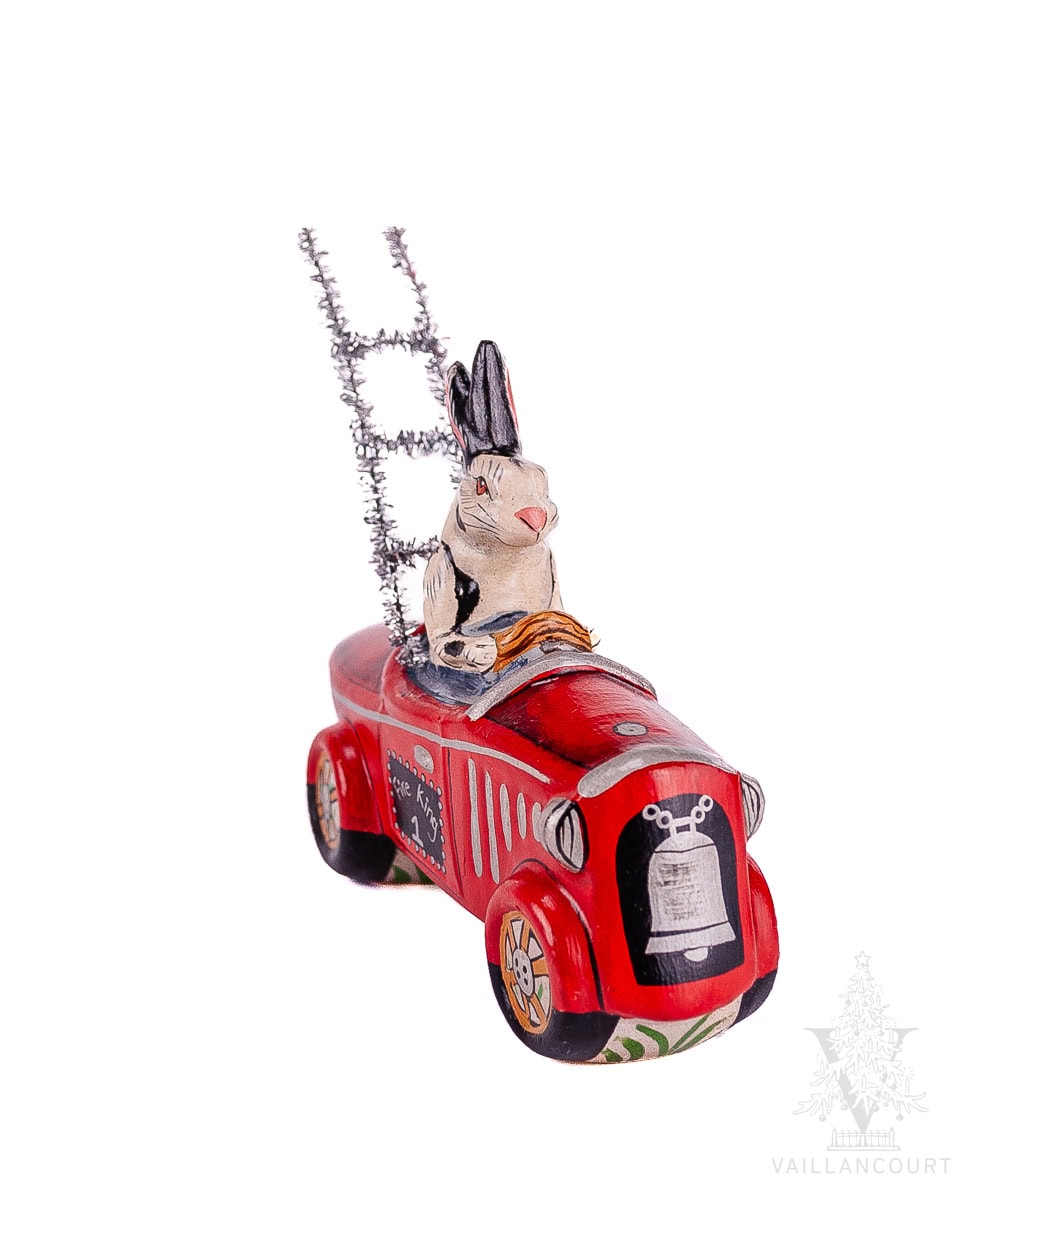 Parade Rabbit Driving Firetruck From Vaillancourt